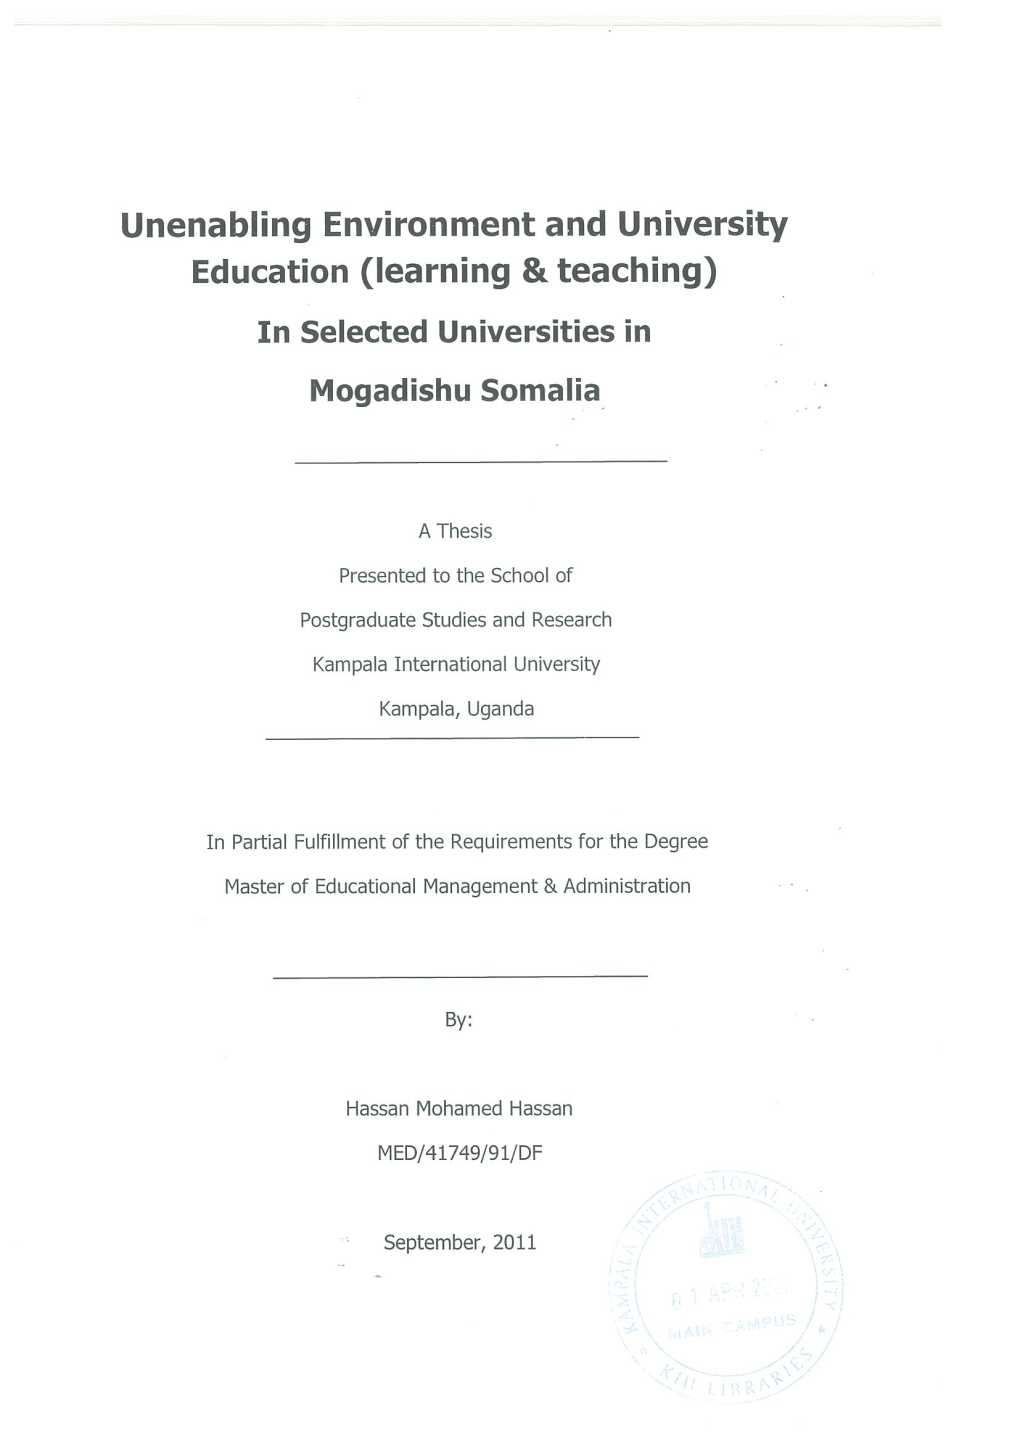 In Selected Universities in Mogadishu Somalia